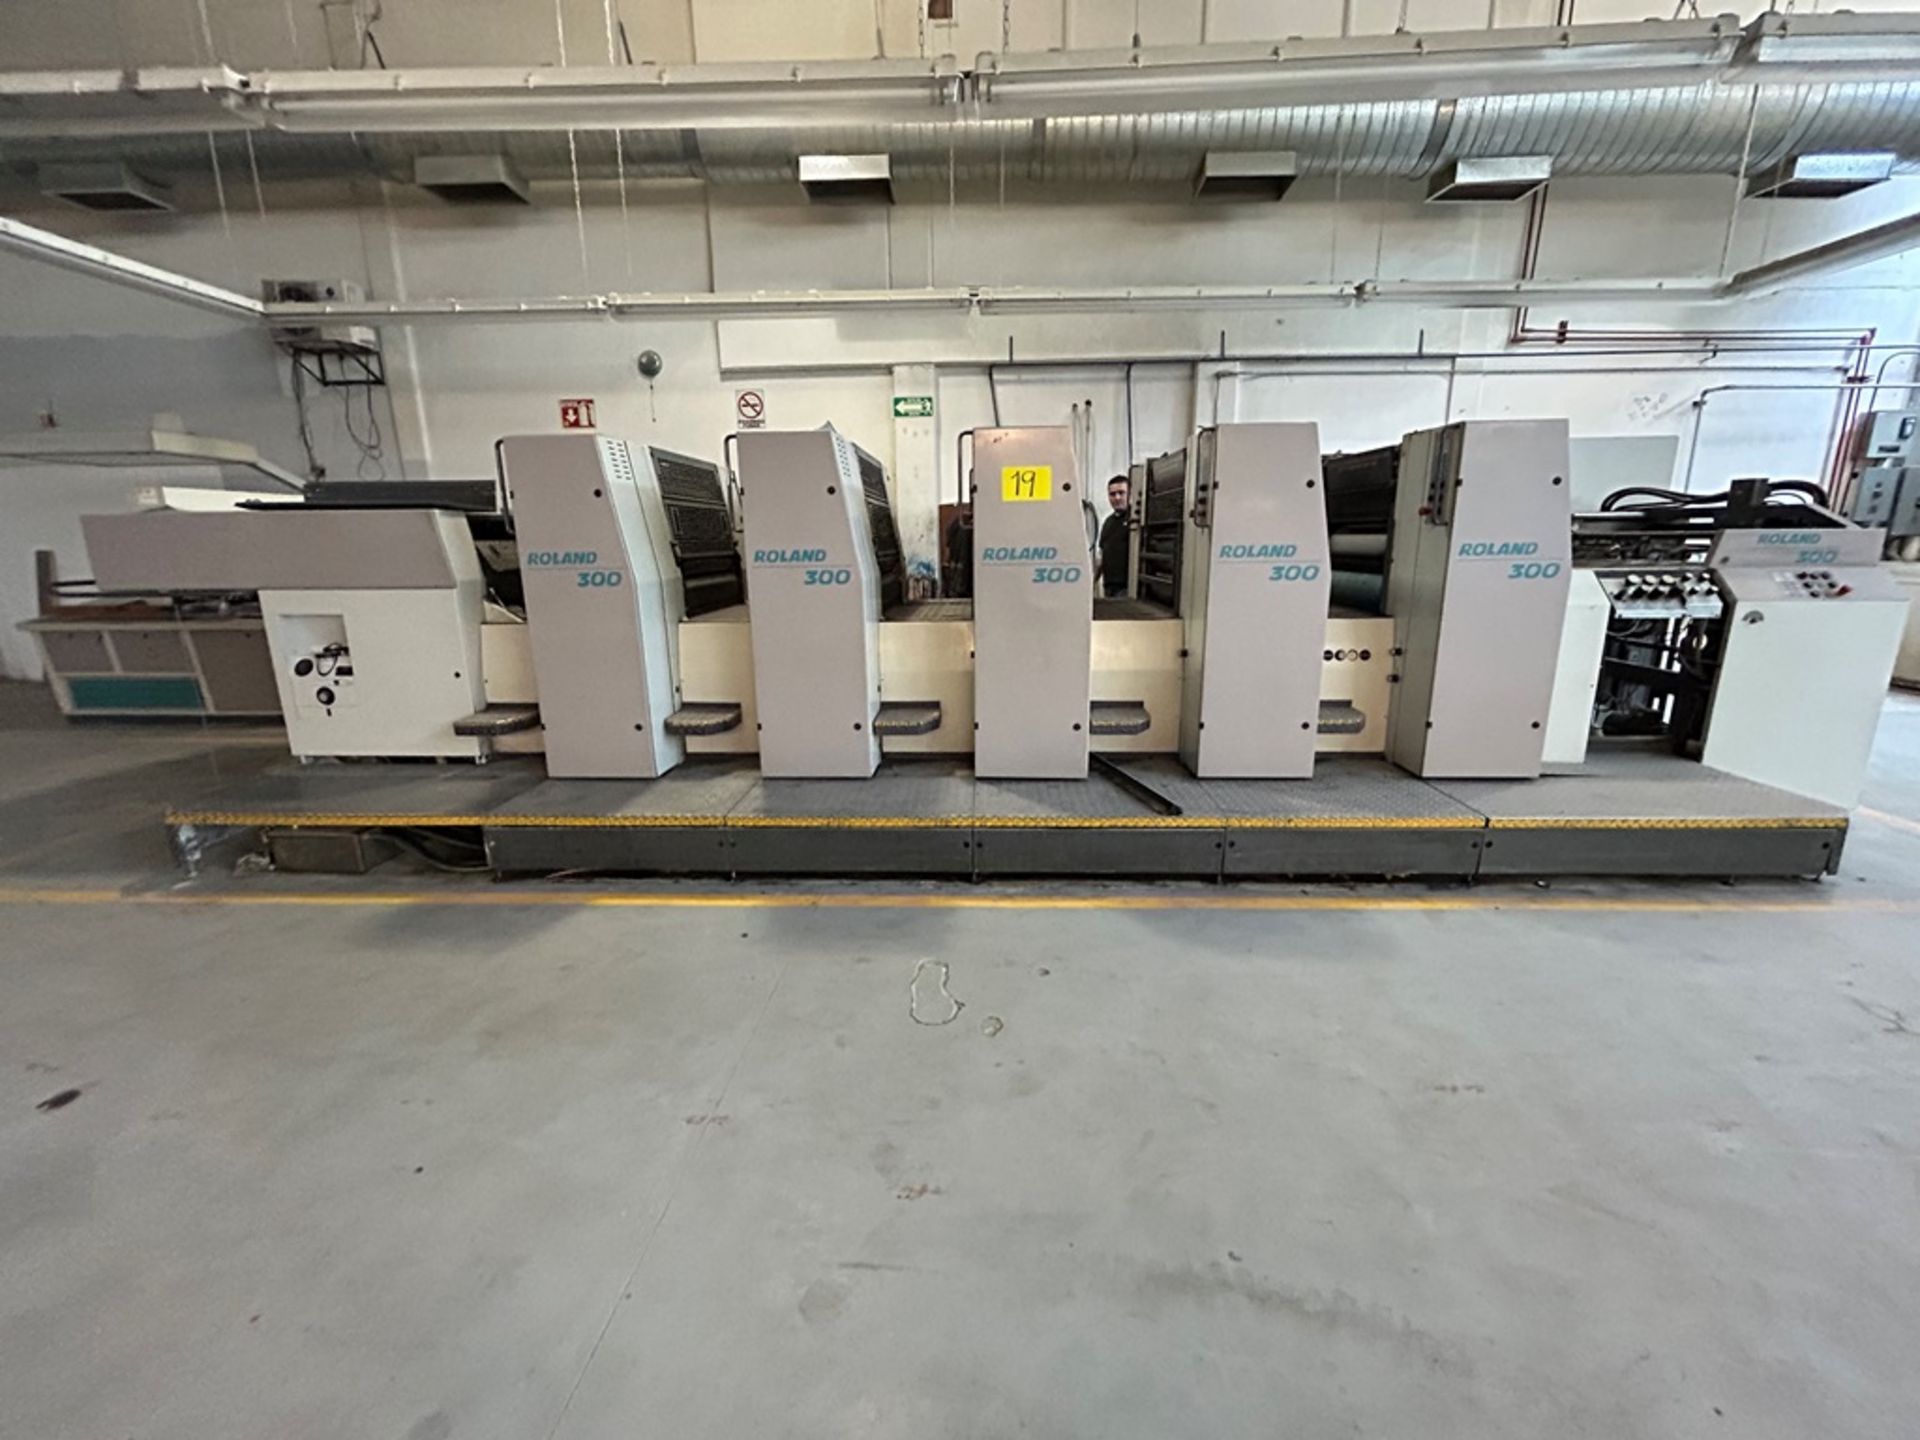 MAN ROLAND Printing Machine (Flatbed Press), Model R305 N 5/0 1/4, Serial No. 28605B, Year 2000, 22 - Image 4 of 18